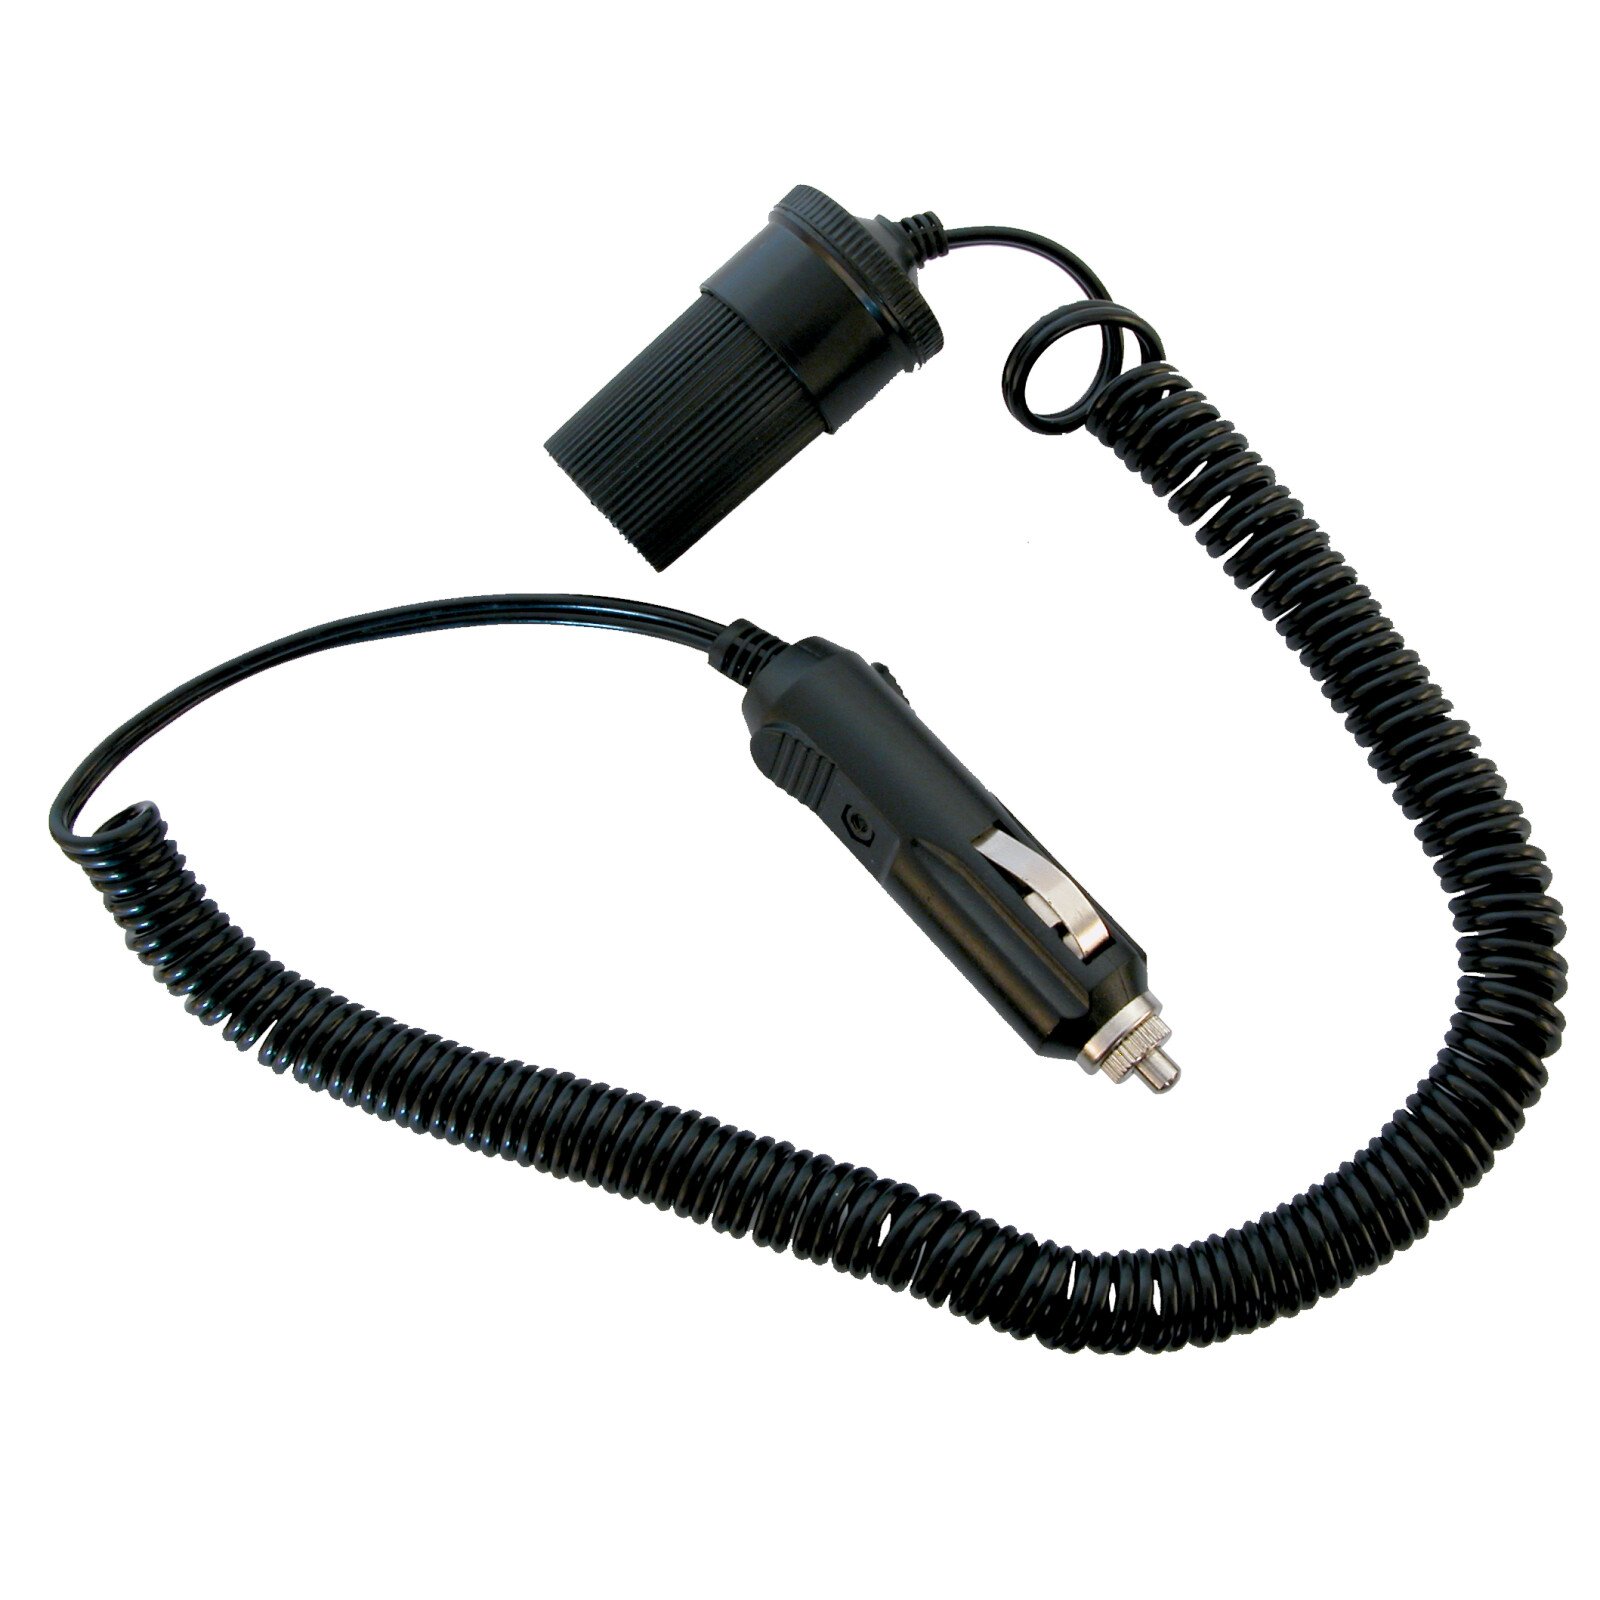 Carpoint extension cord 12-24V 3m max 5A thumb